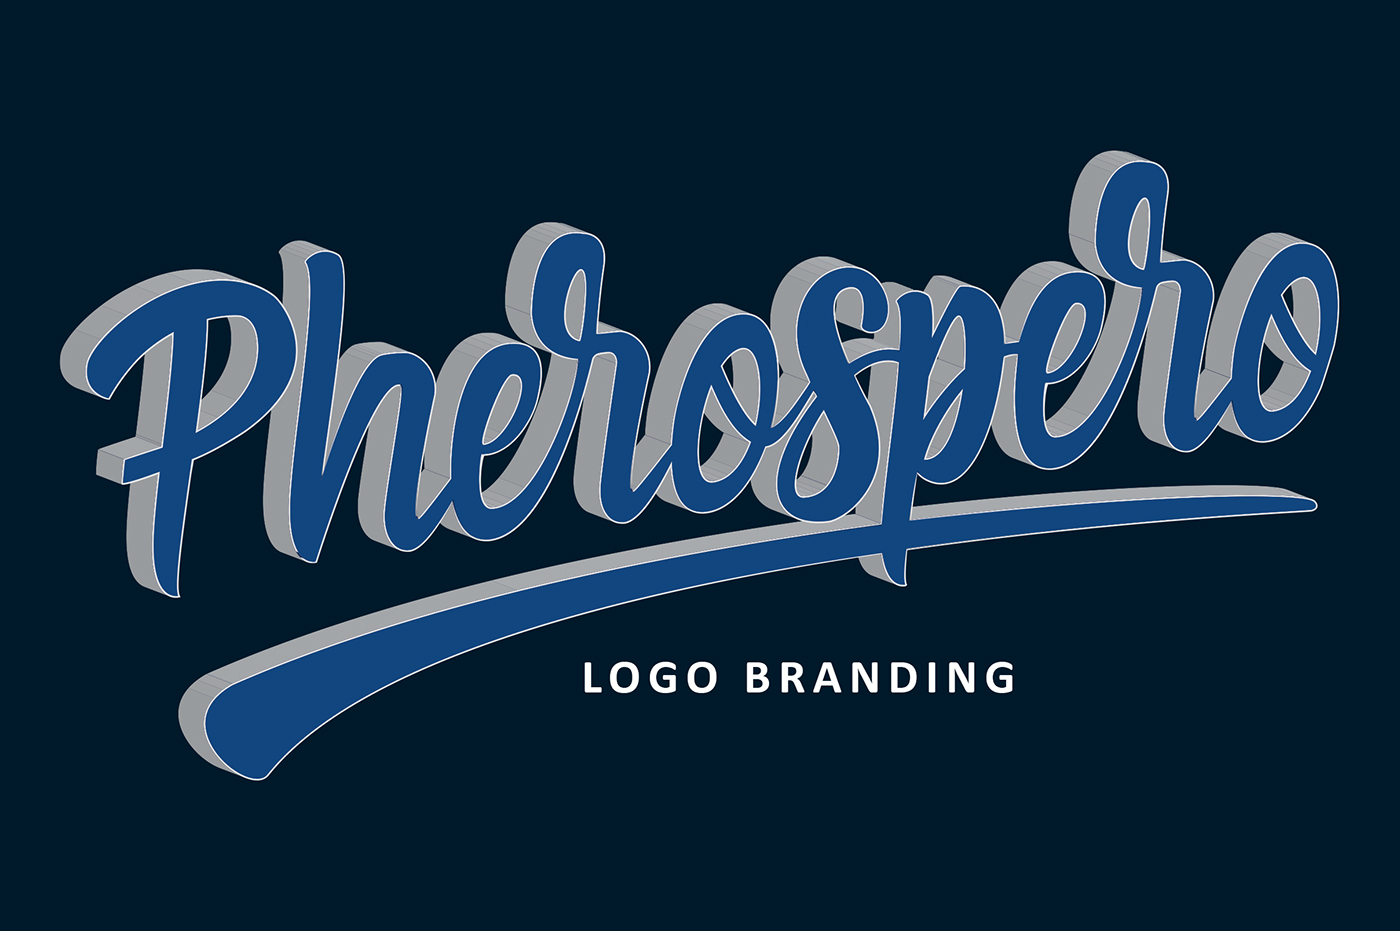 #handlettering  #handwritten #typography #Boldcript #crayola #drawing #Branding #LogoBranding #logotype 